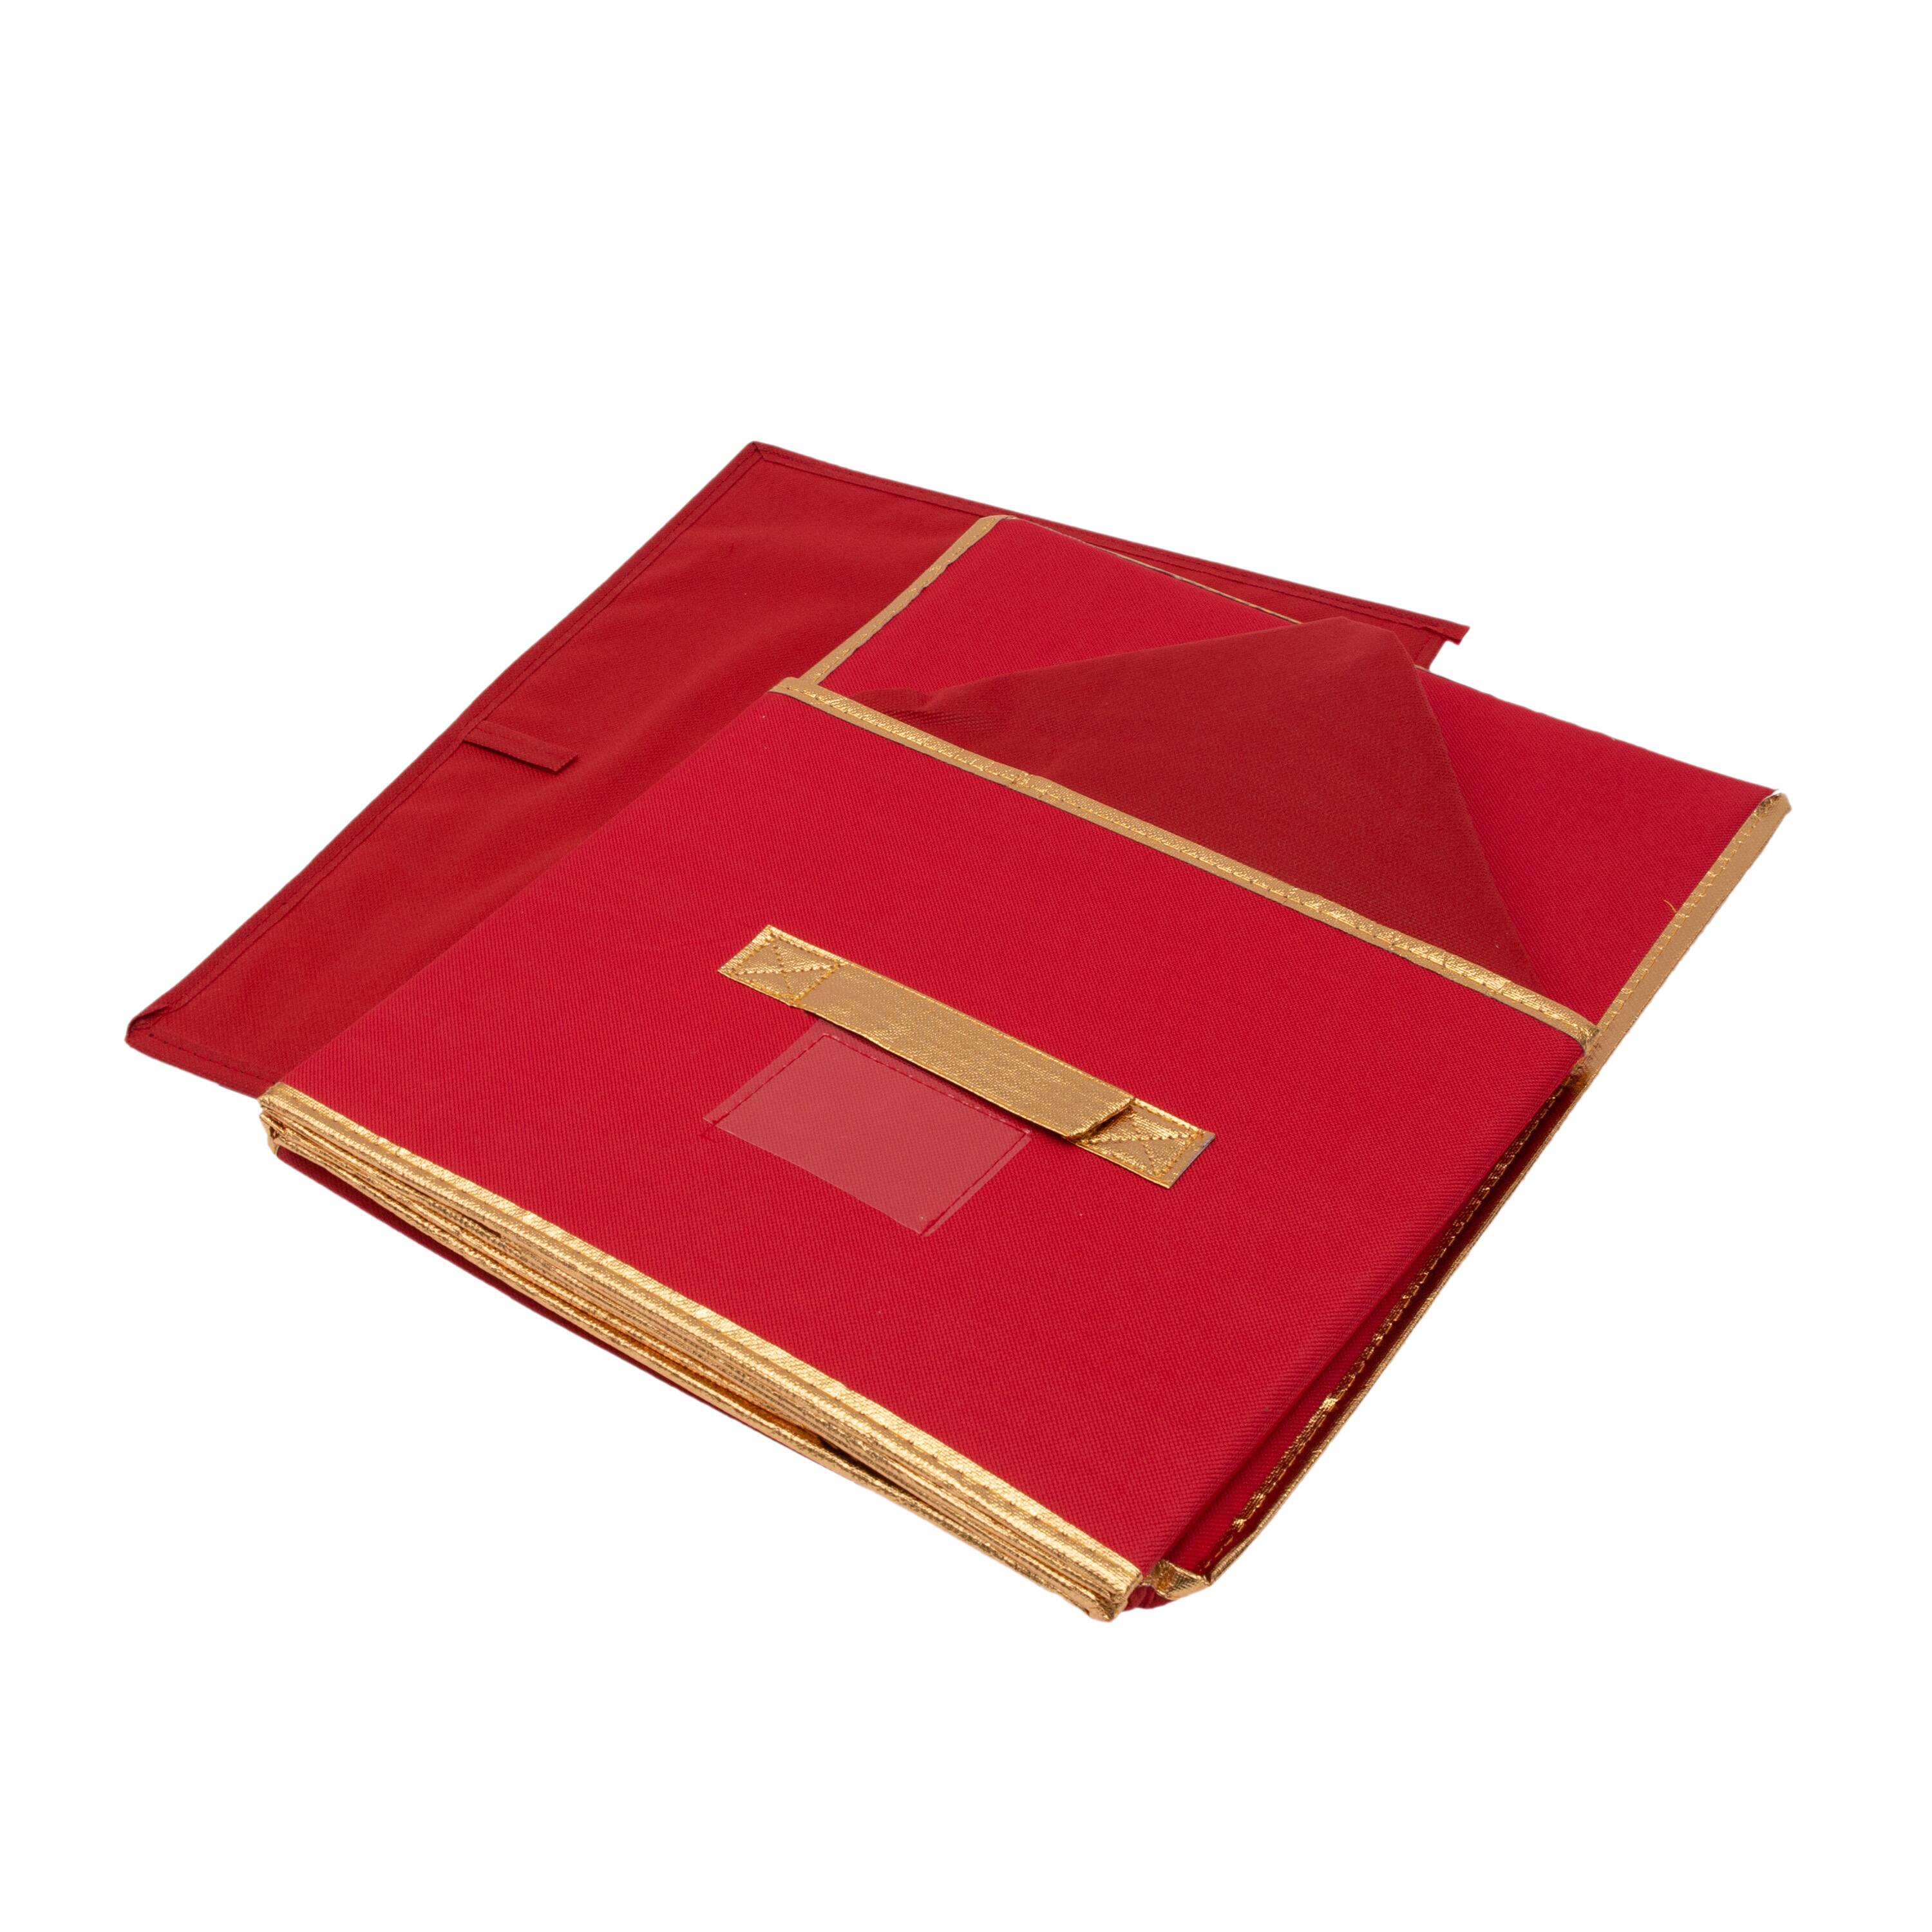 Simplify Red Holiday Jumbo Storage Box